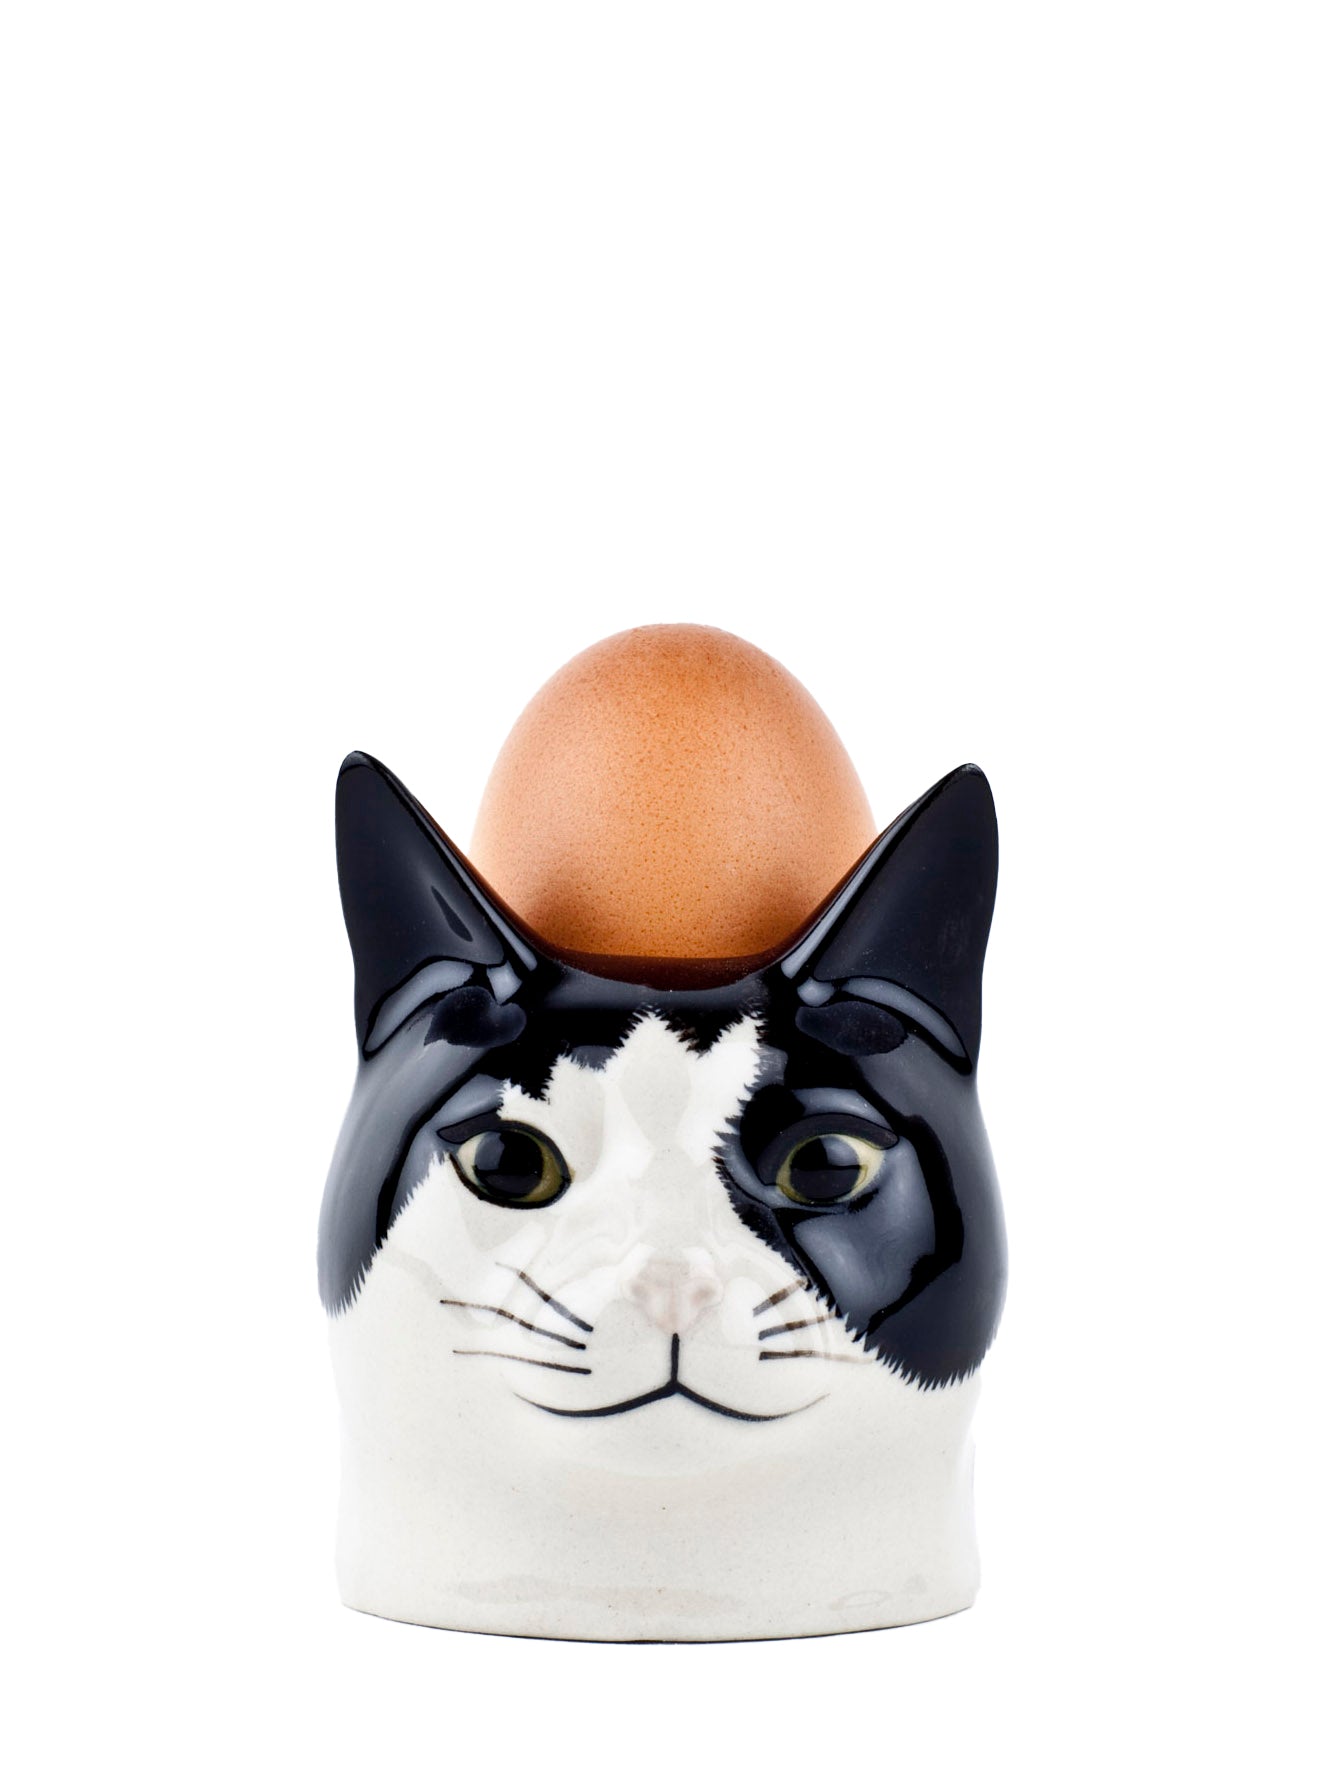 Barney Cat Egg Cup